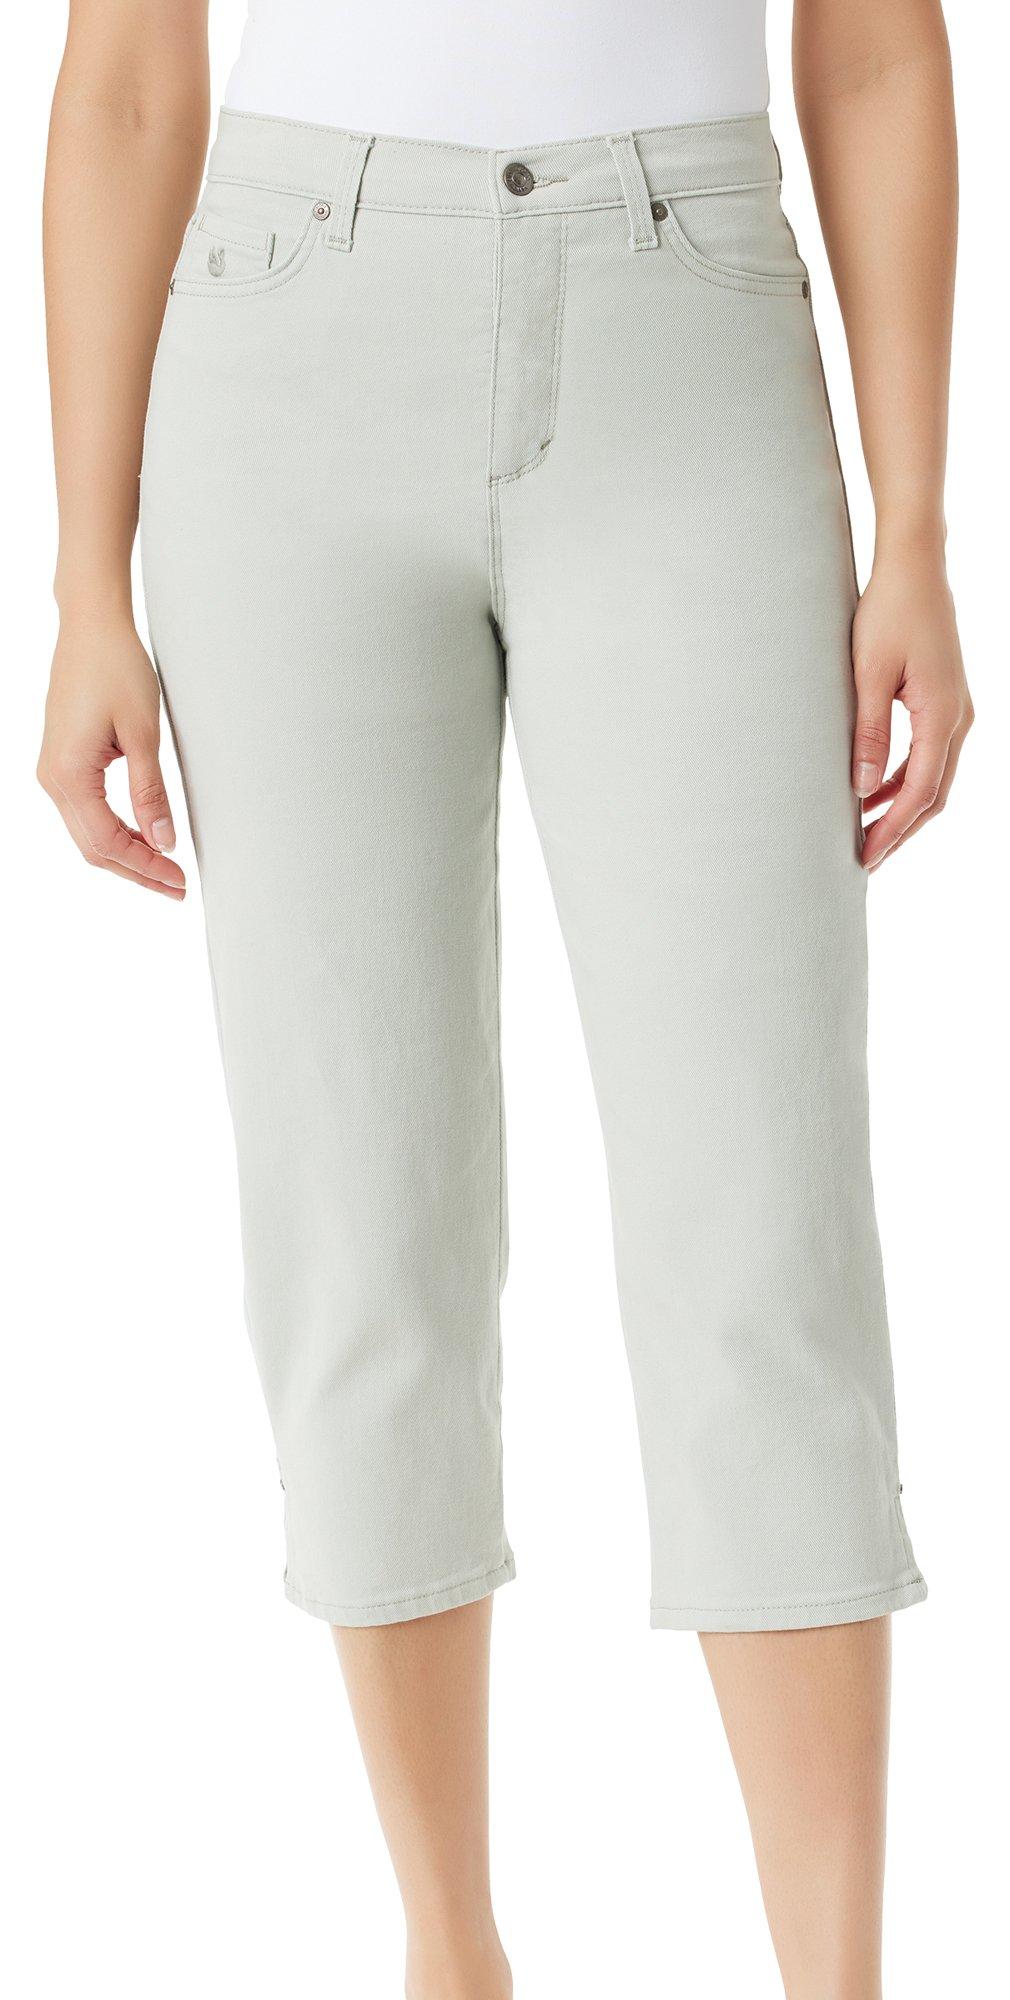 Women's Capri Pants, Capris, Cropped and Ankle Pants